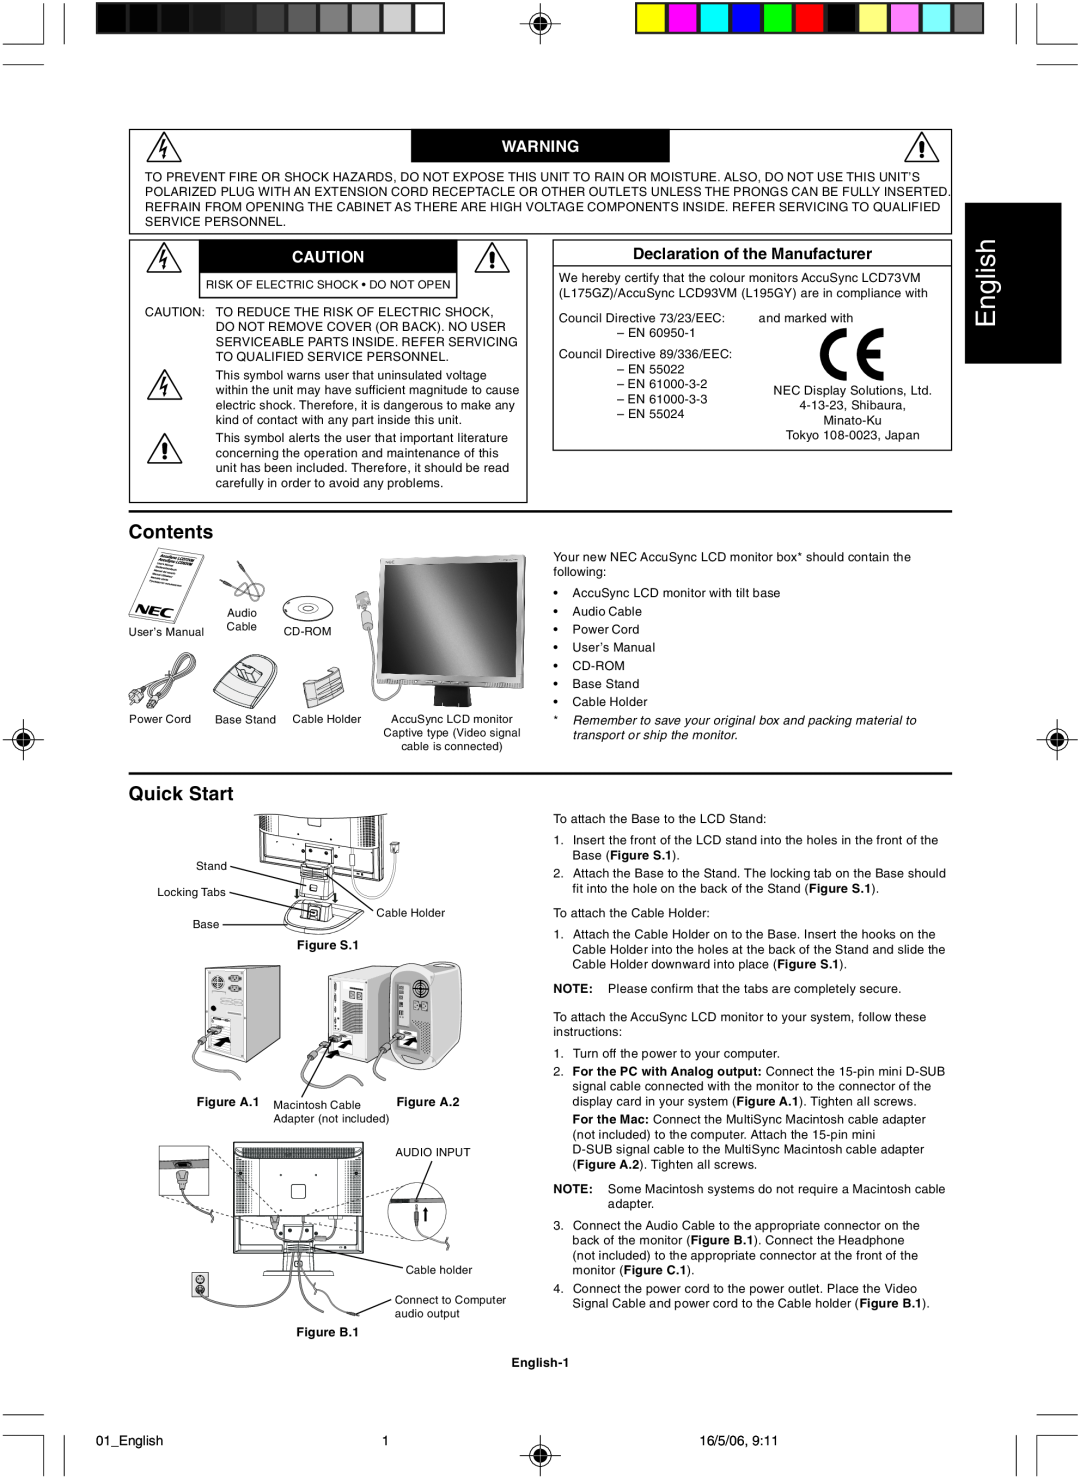 NEC LCD73VM user manual English, Contents, Quick Start 